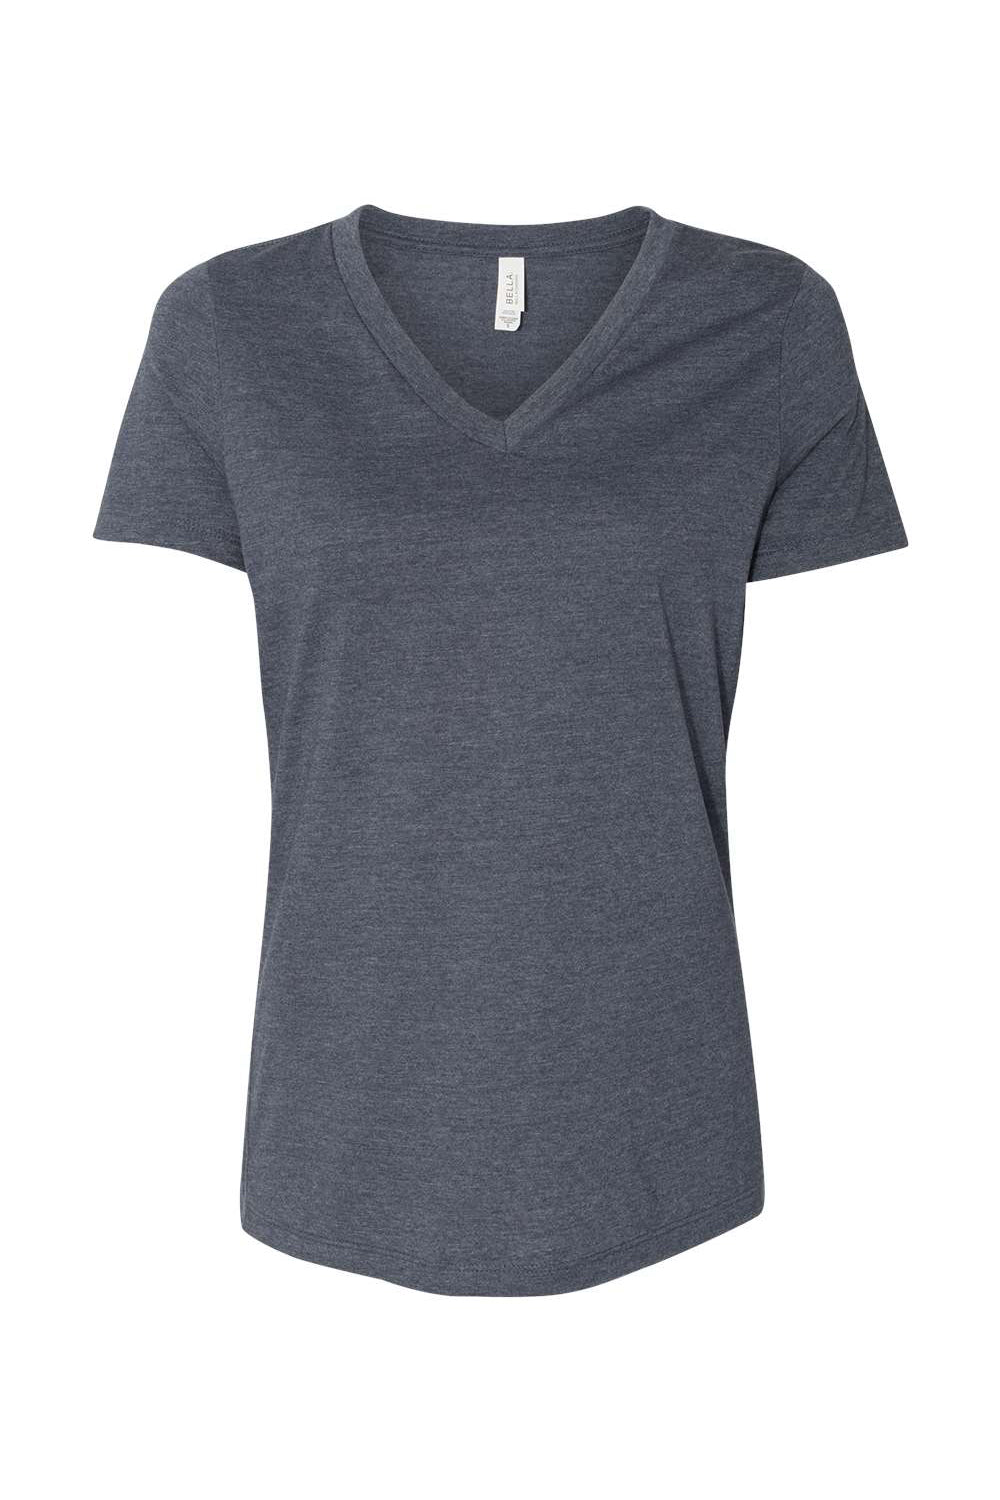 Bella + Canvas BC6405CVC Womens Relaxed Jersey Short Sleeve V-Neck T-Shirt Heather Navy Blue Flat Front